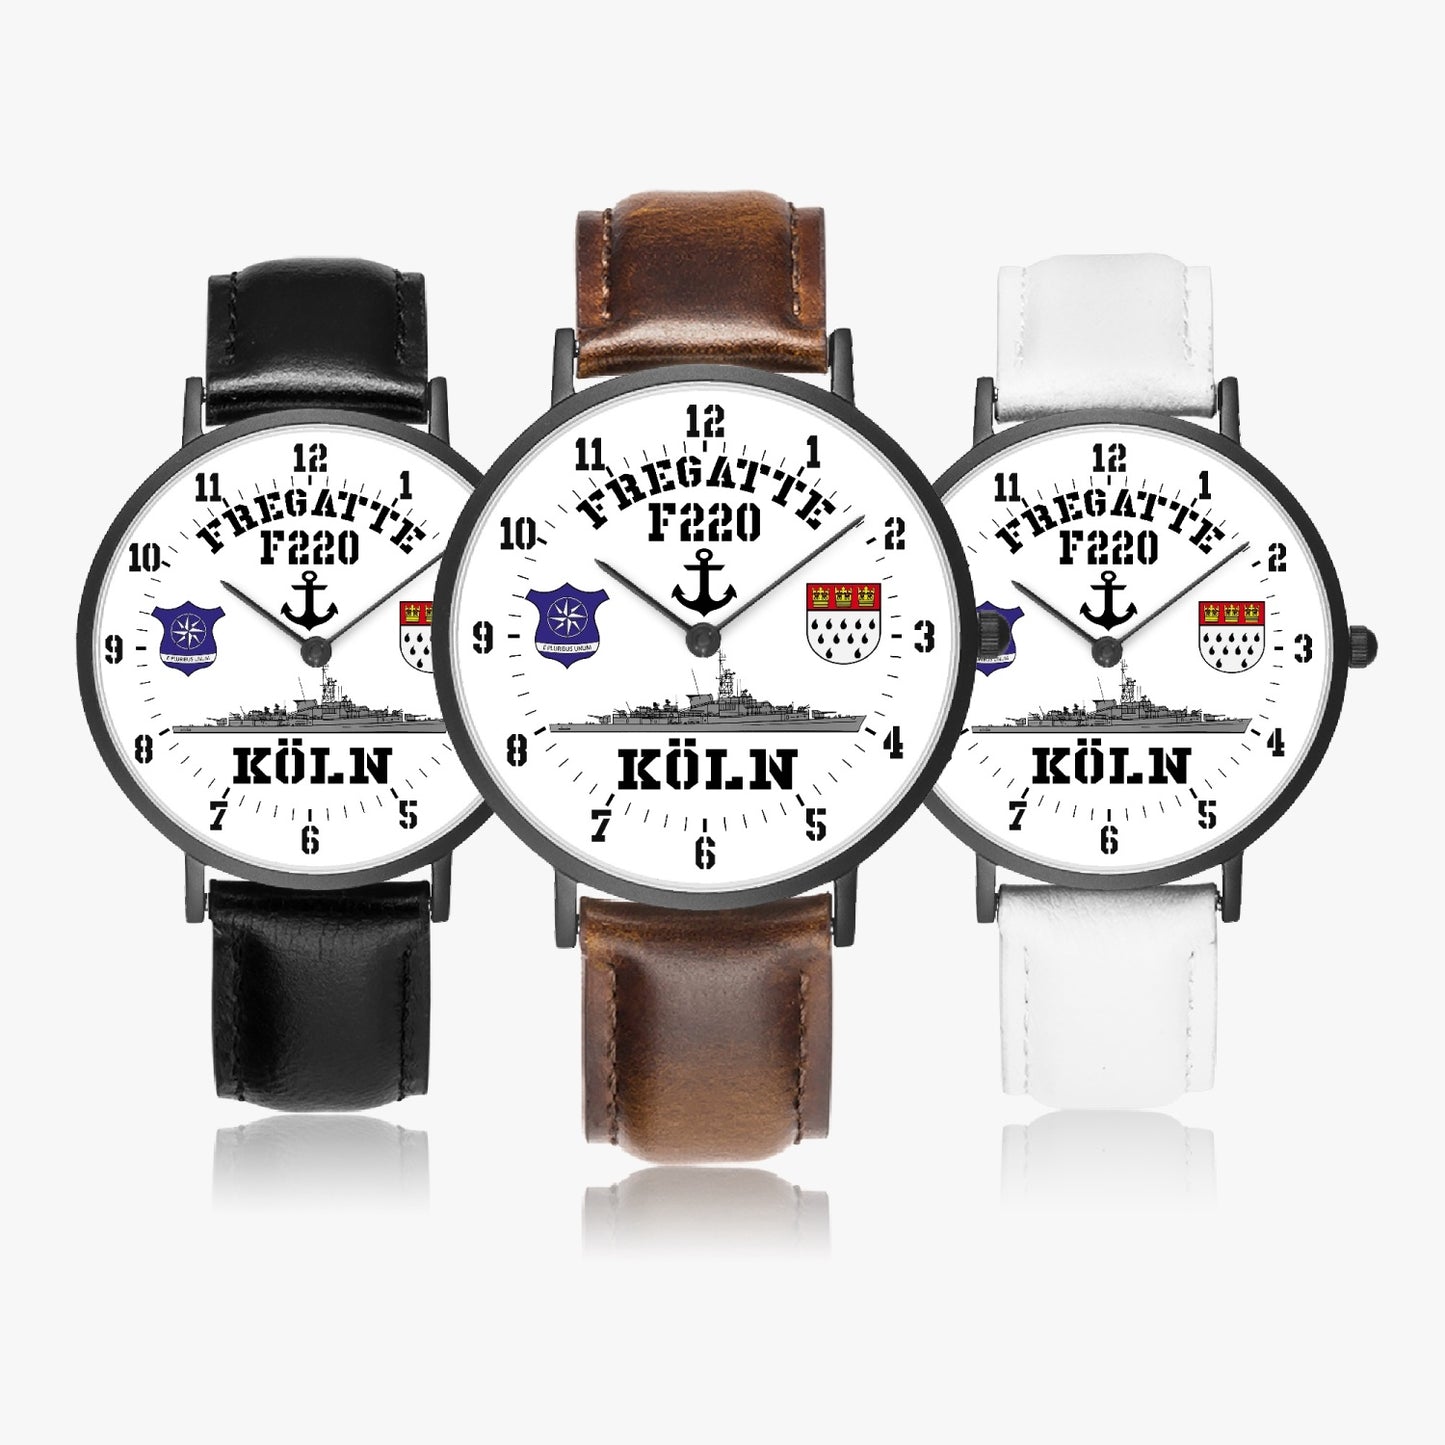 160. Hot Selling Ultra-Thin Leather Strap Quartz Watch (Black)